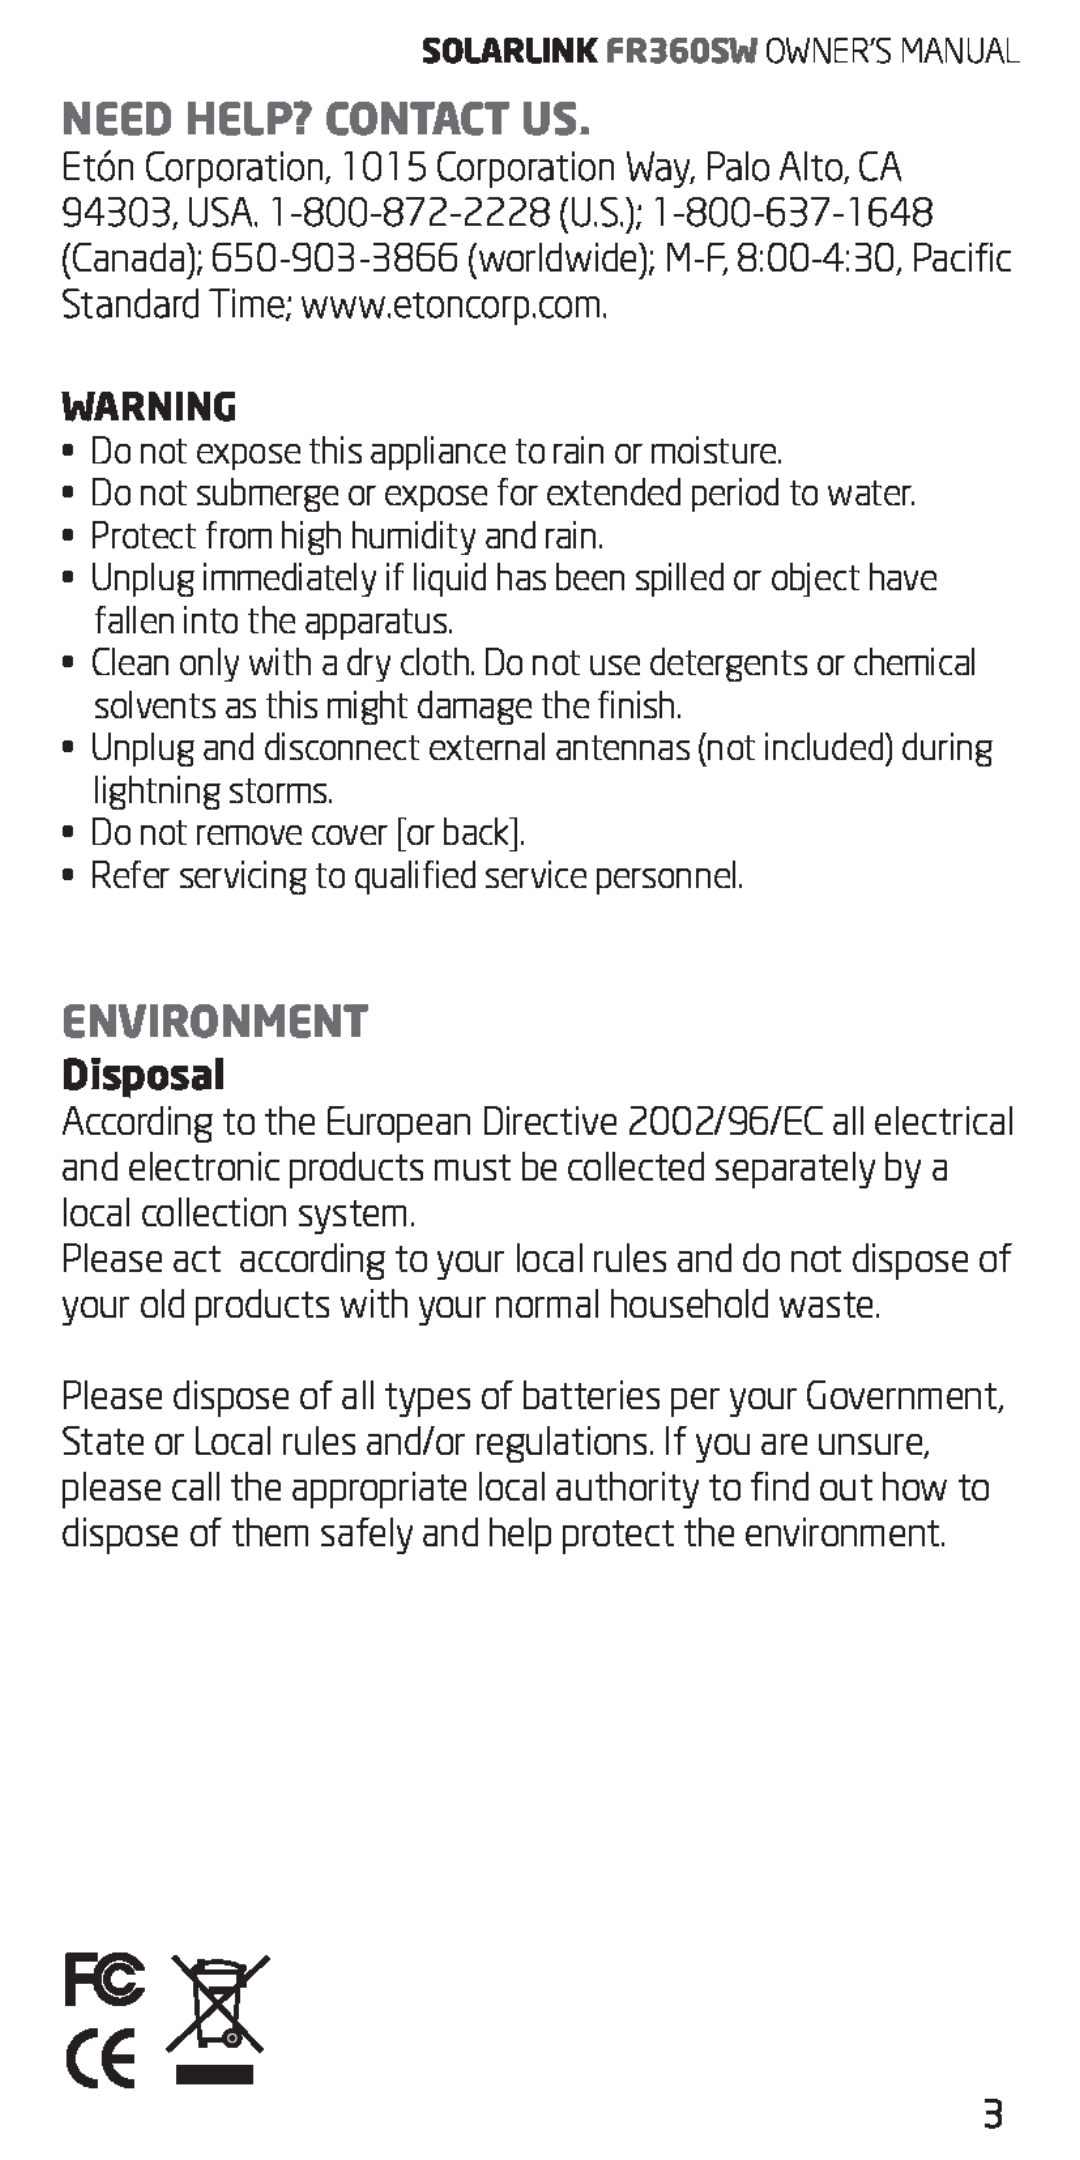 Eton FR360 owner manual Need Help? Contact Us, Environment, Disposal 